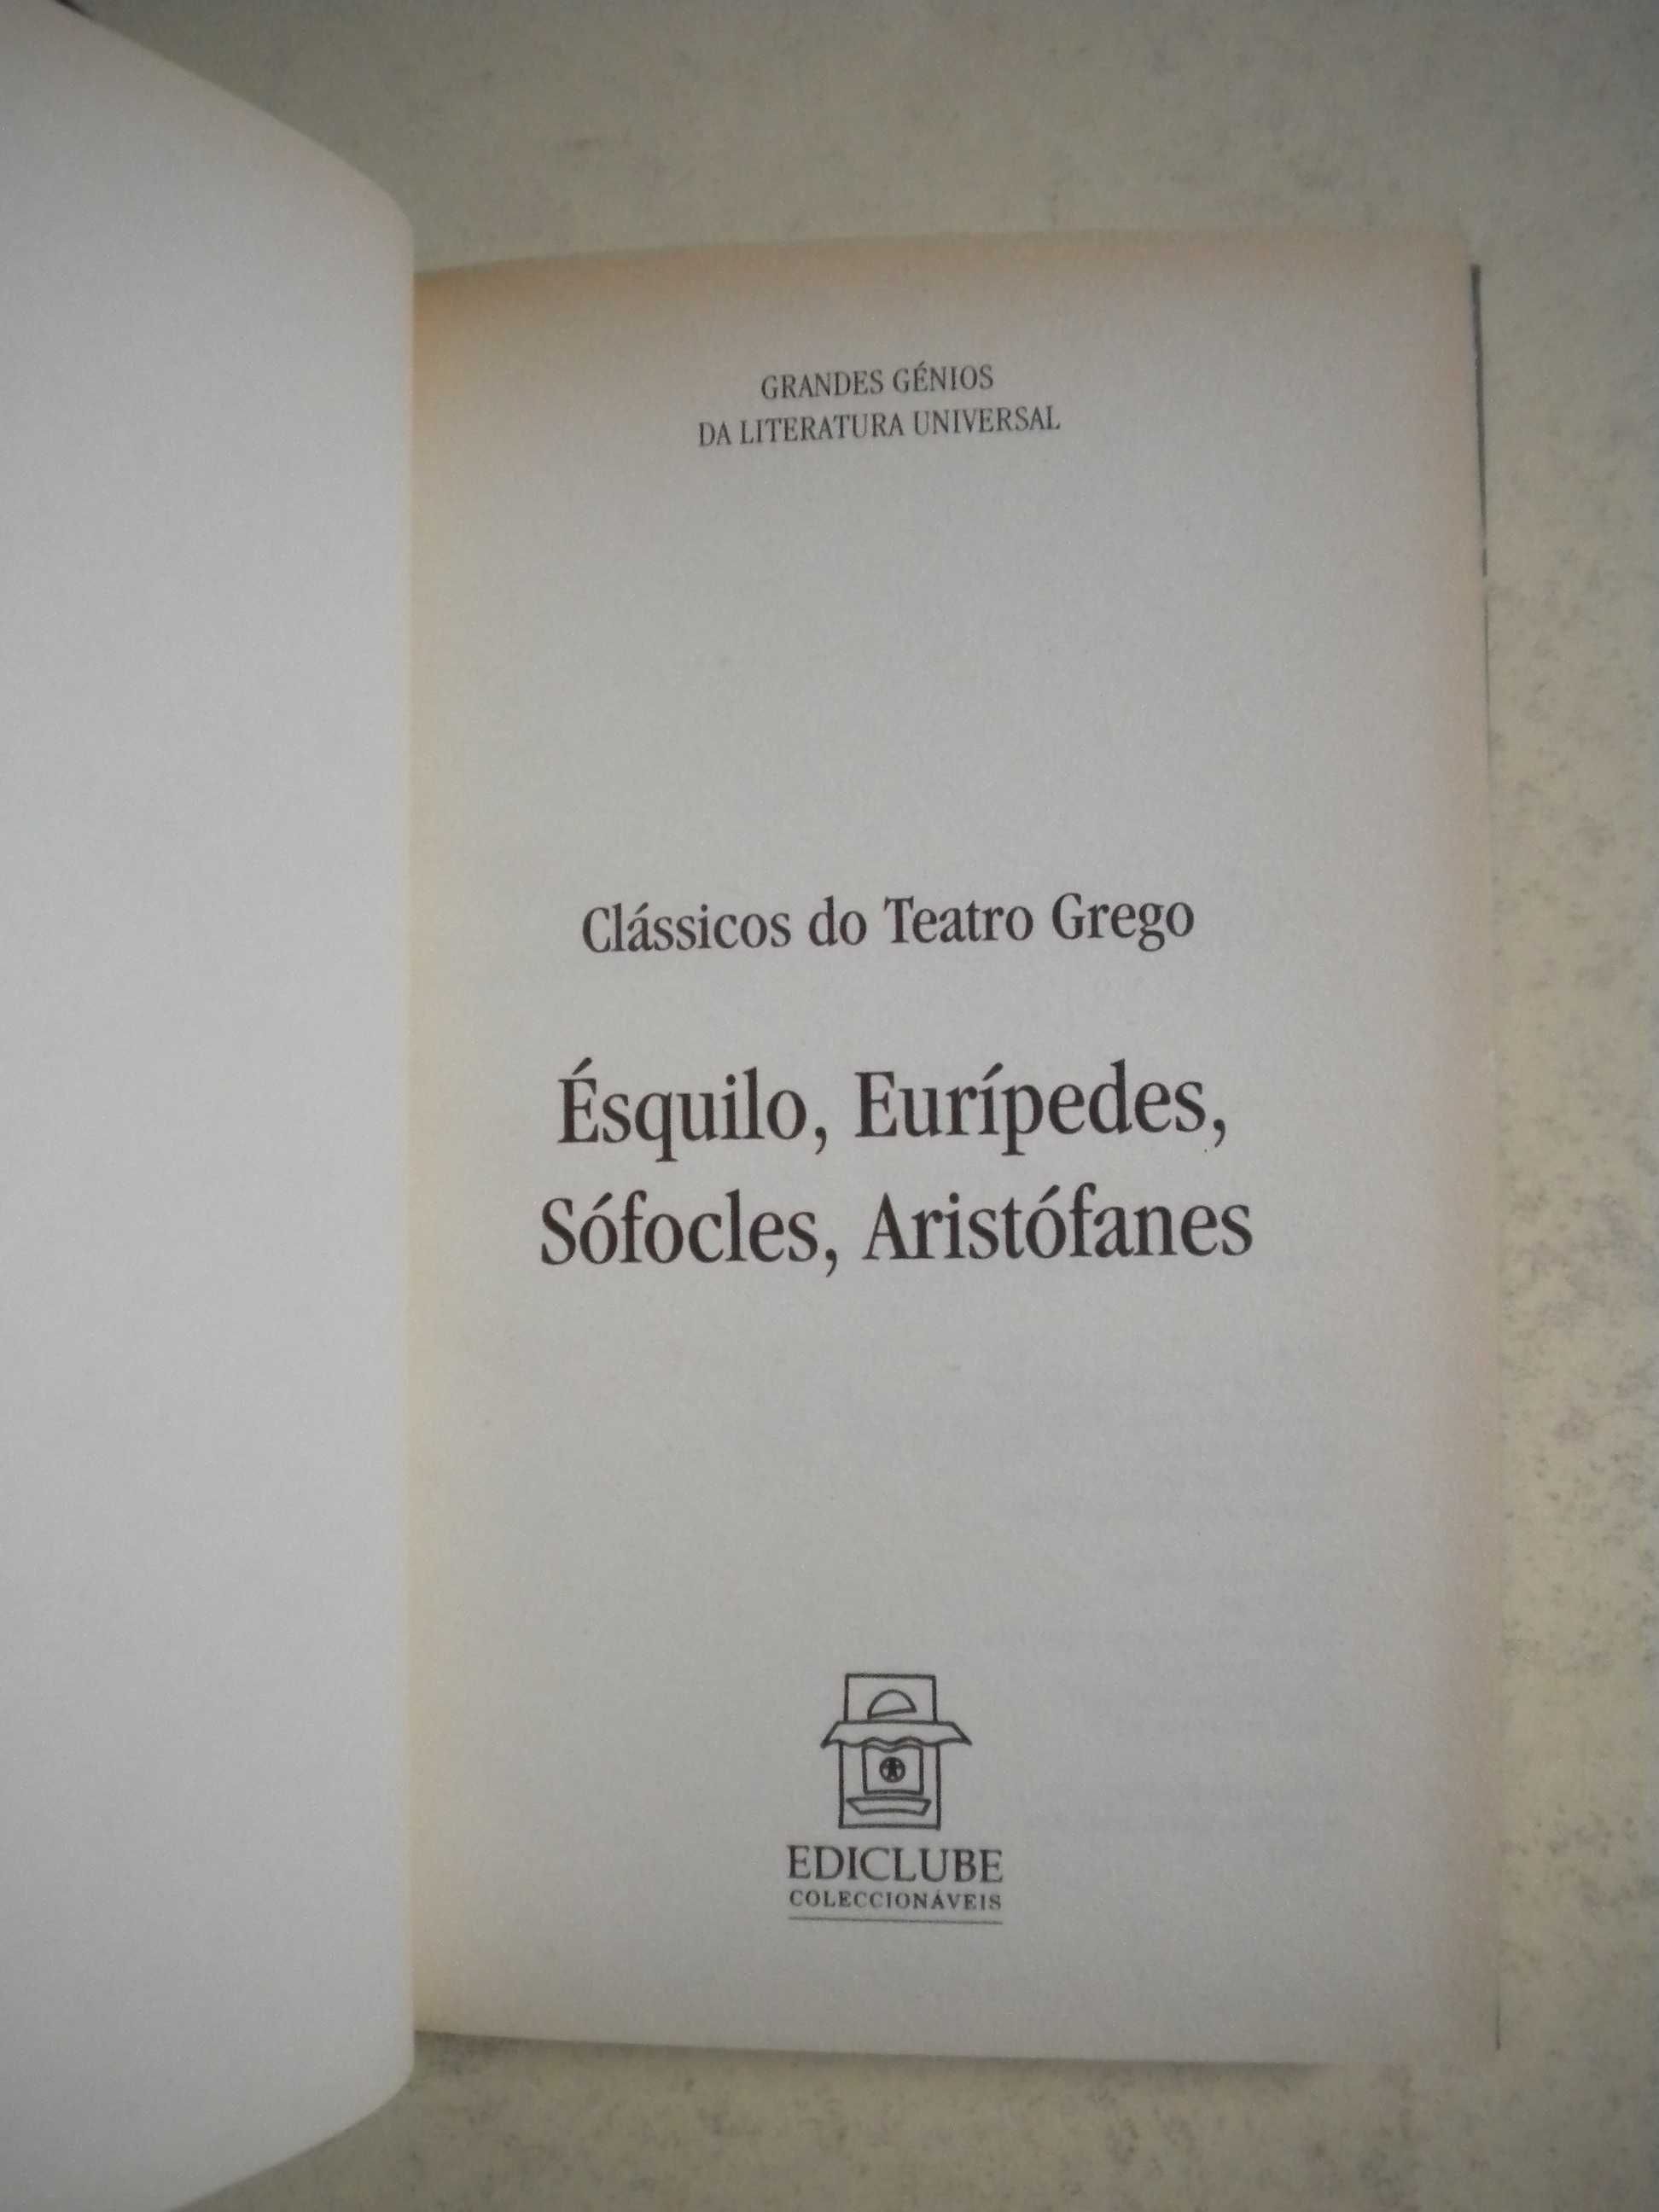 Clássicos do Teatro Grego
Ésquilo, Eurípedes, Sófocles, Aristófanes